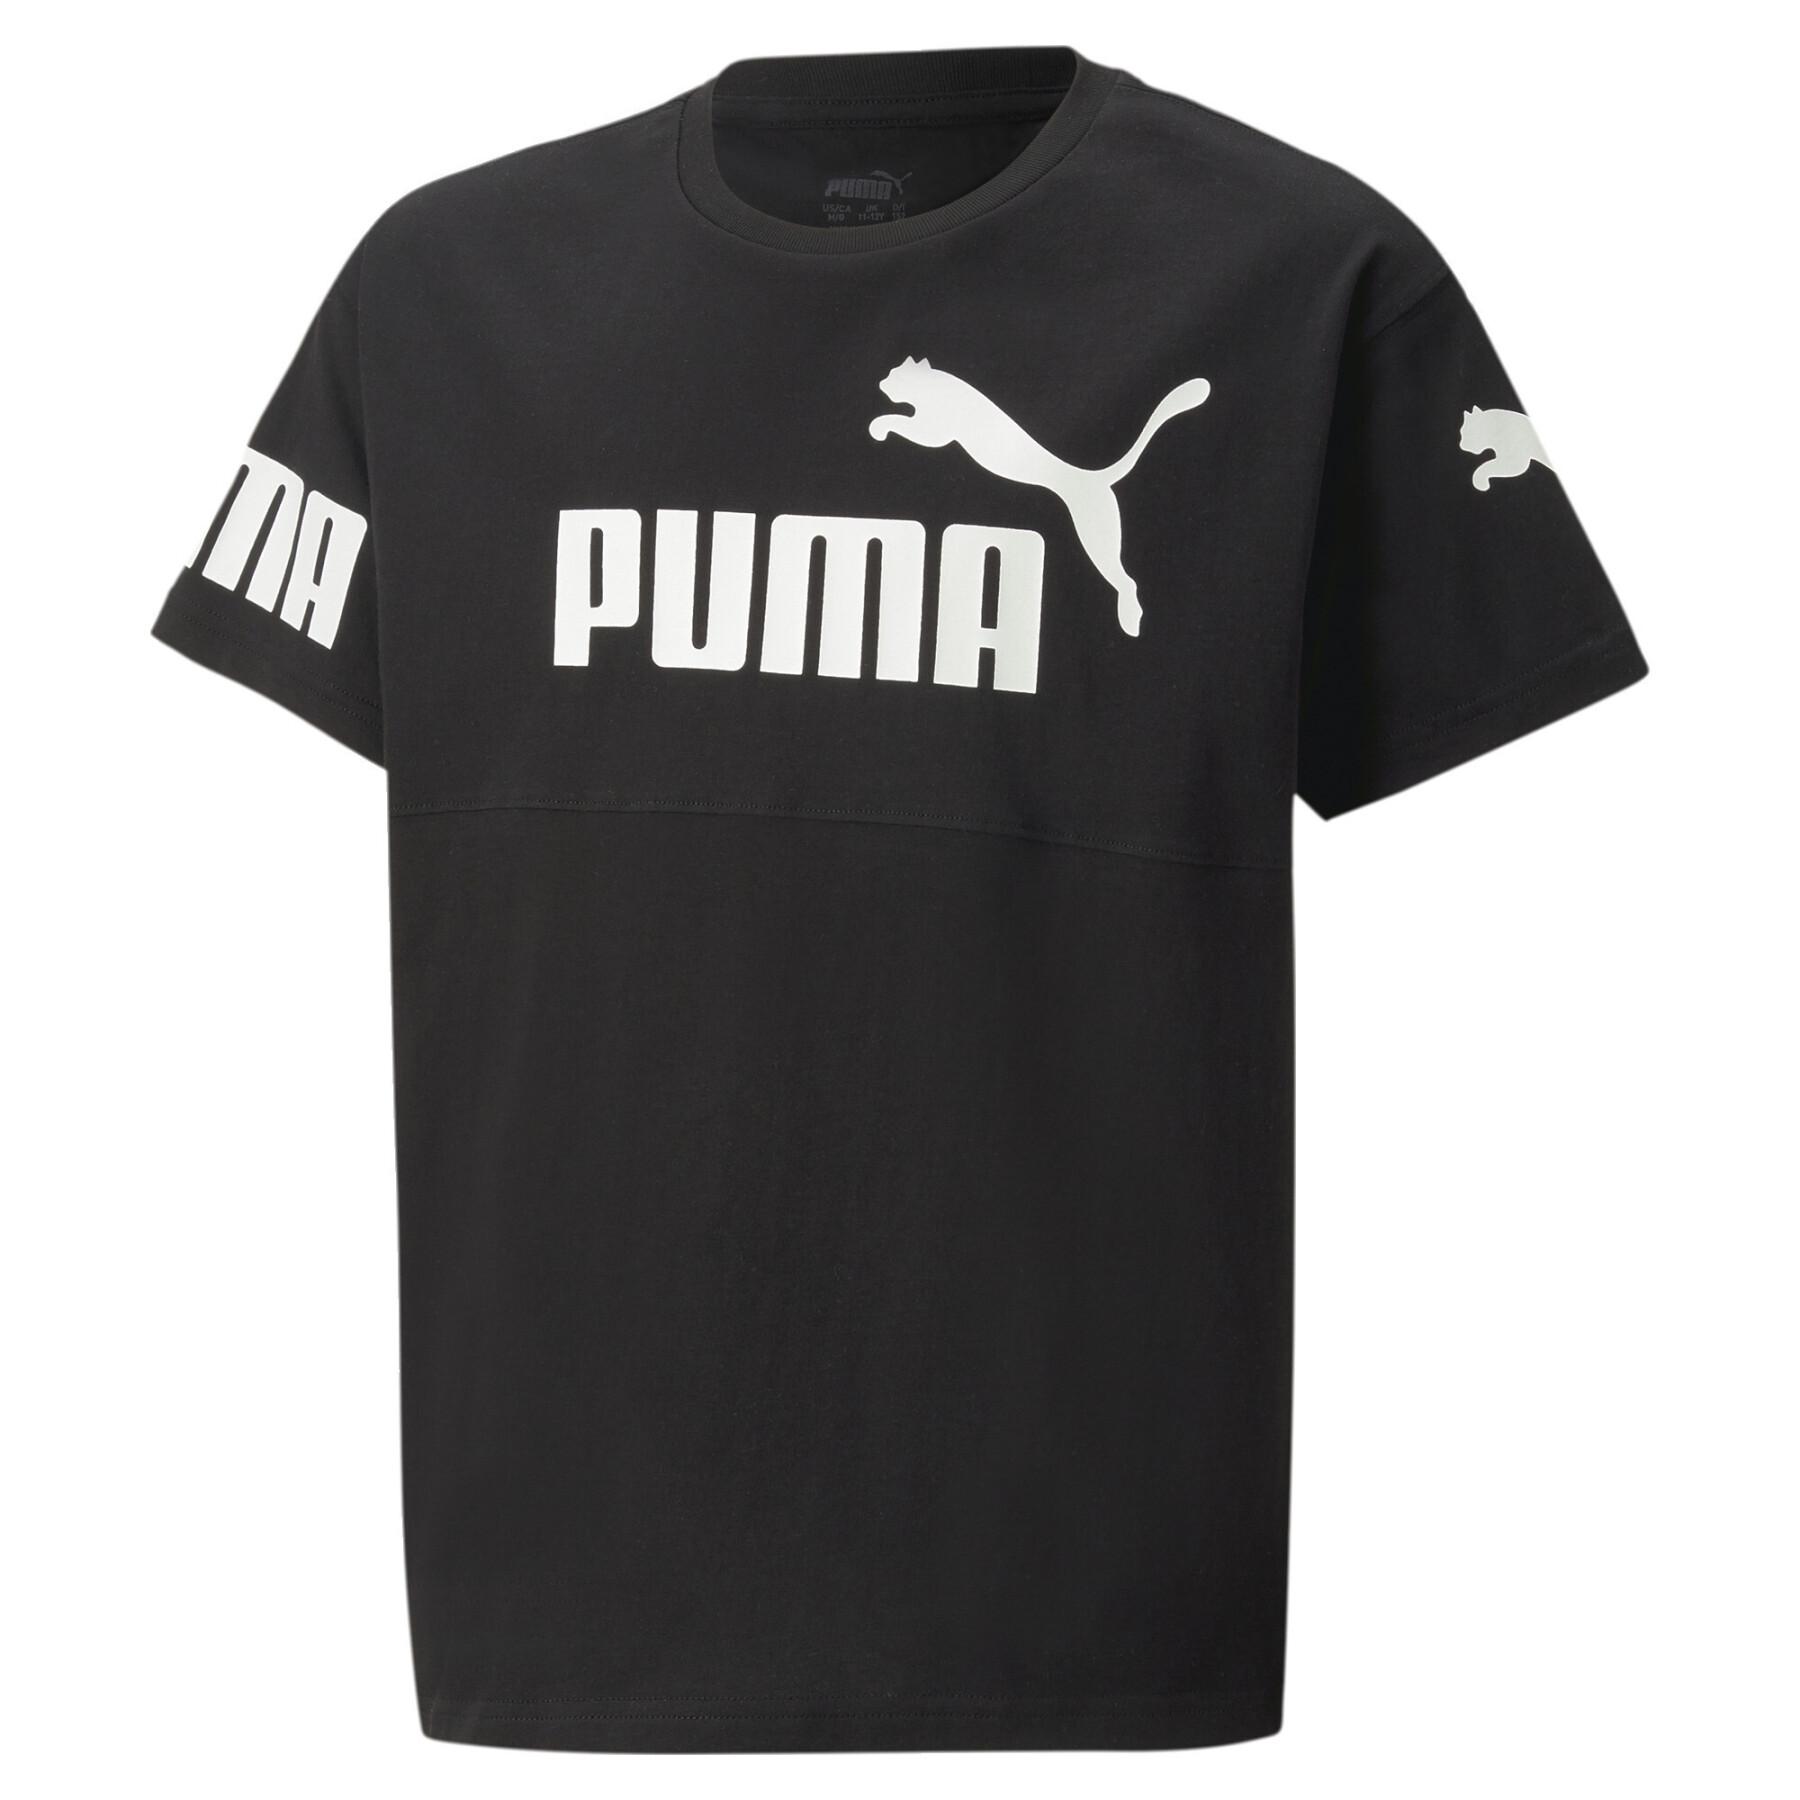 Kinder T-Shirt Puma Power